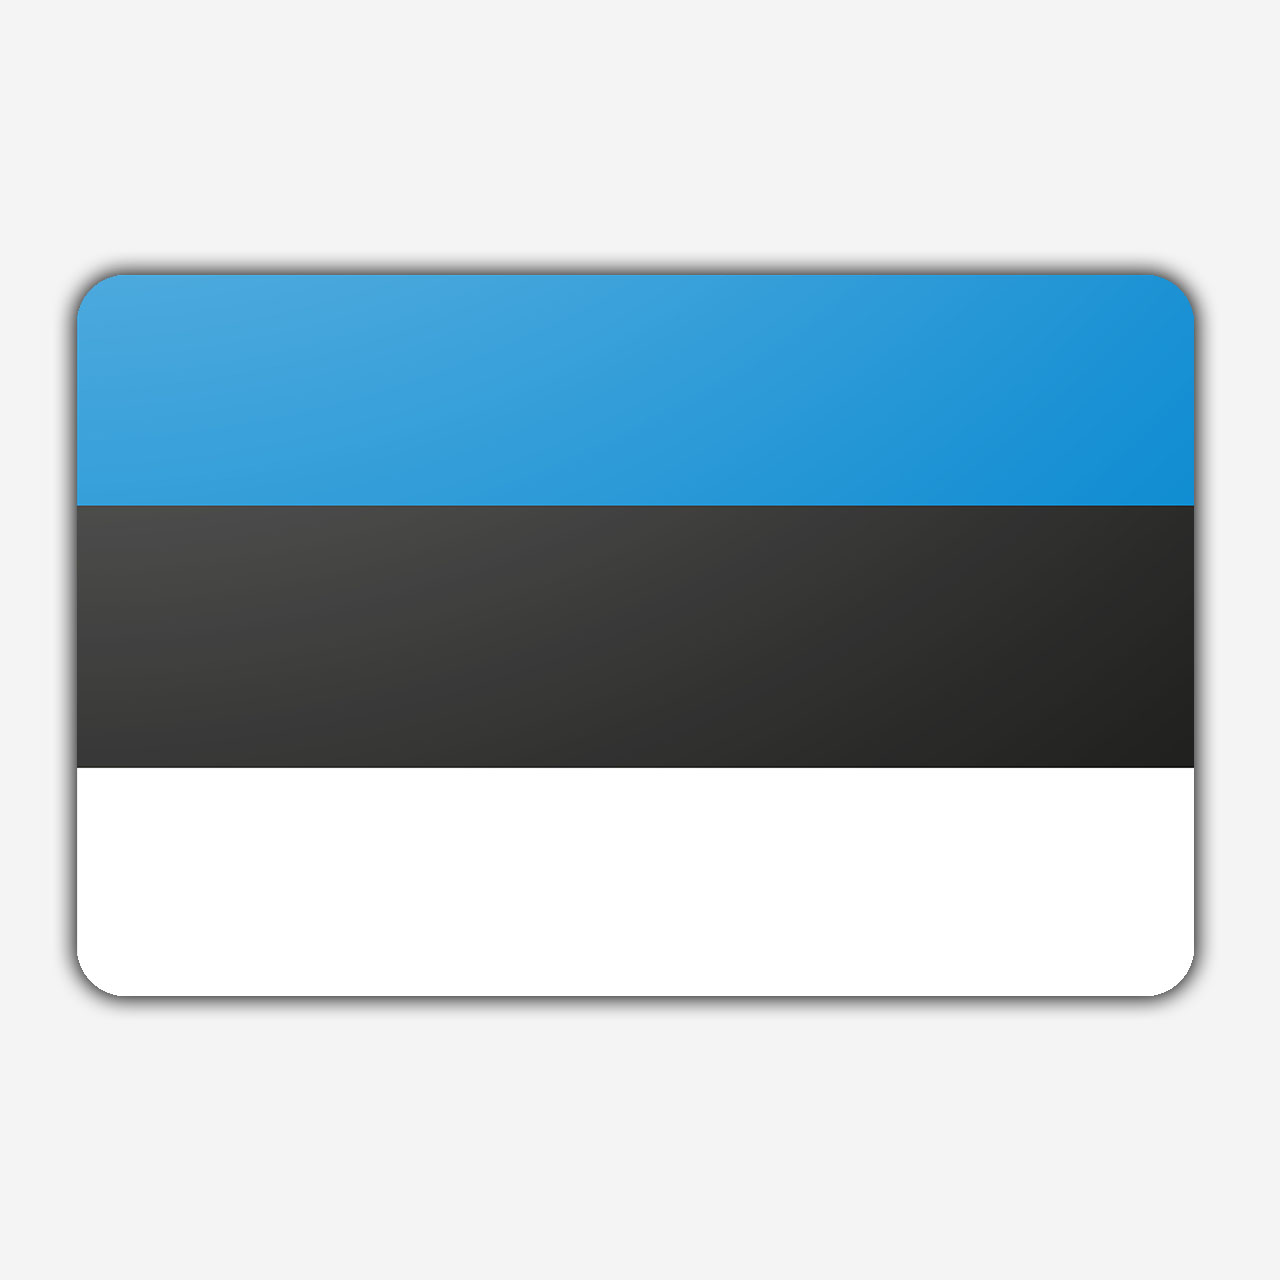 Tafelvlag Estland